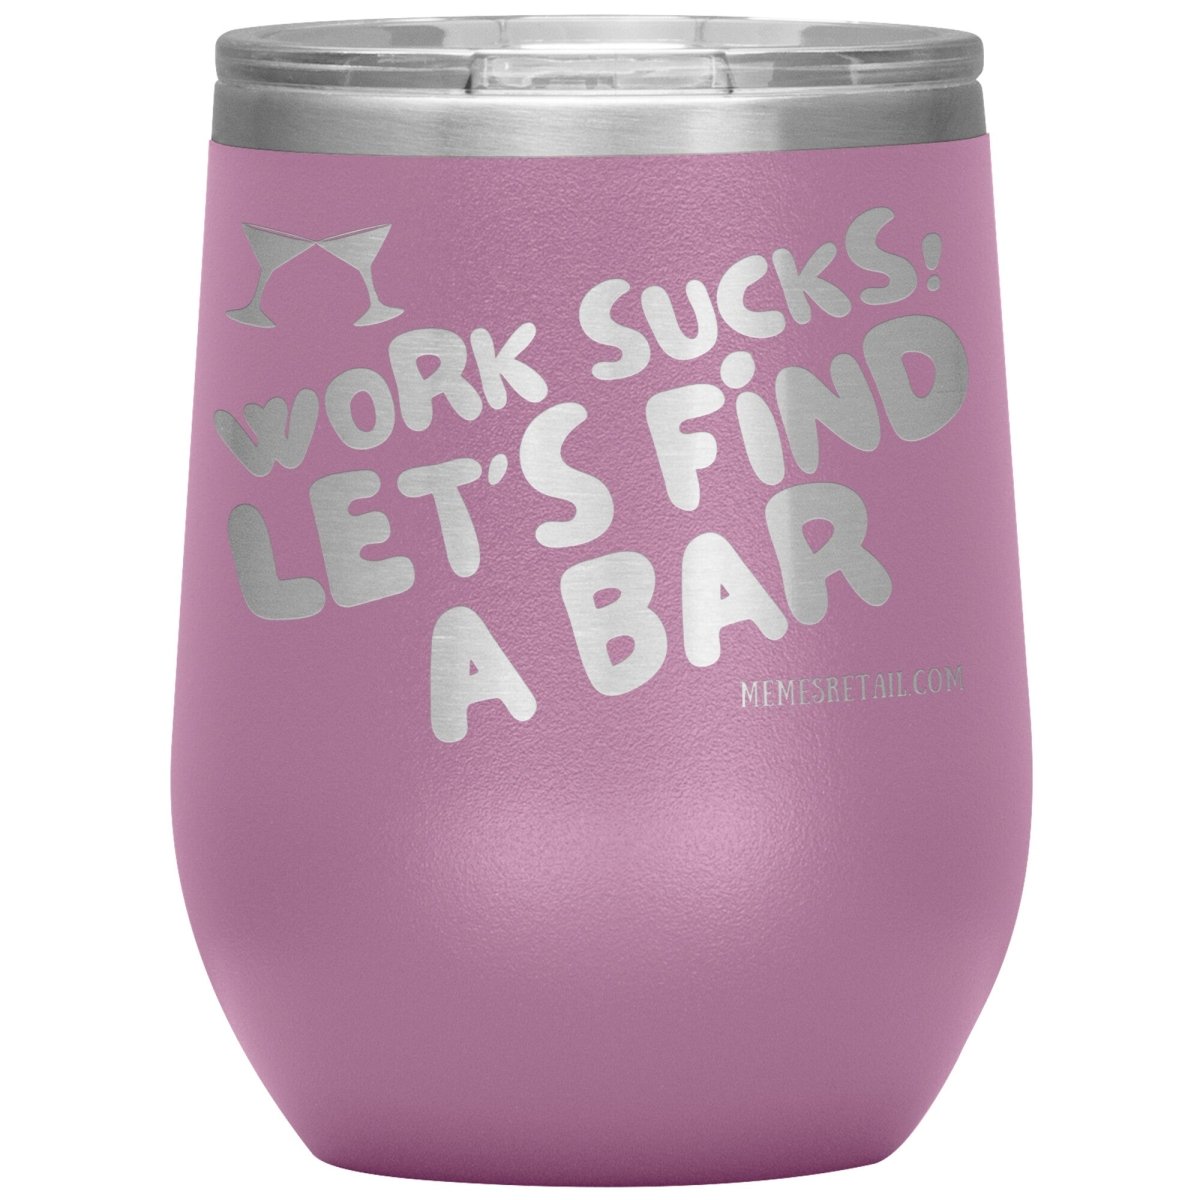 Work Sucks! Let's Find A Bar Tumblers, 12oz Wine Insulated Tumbler / Light Purple - MemesRetail.com